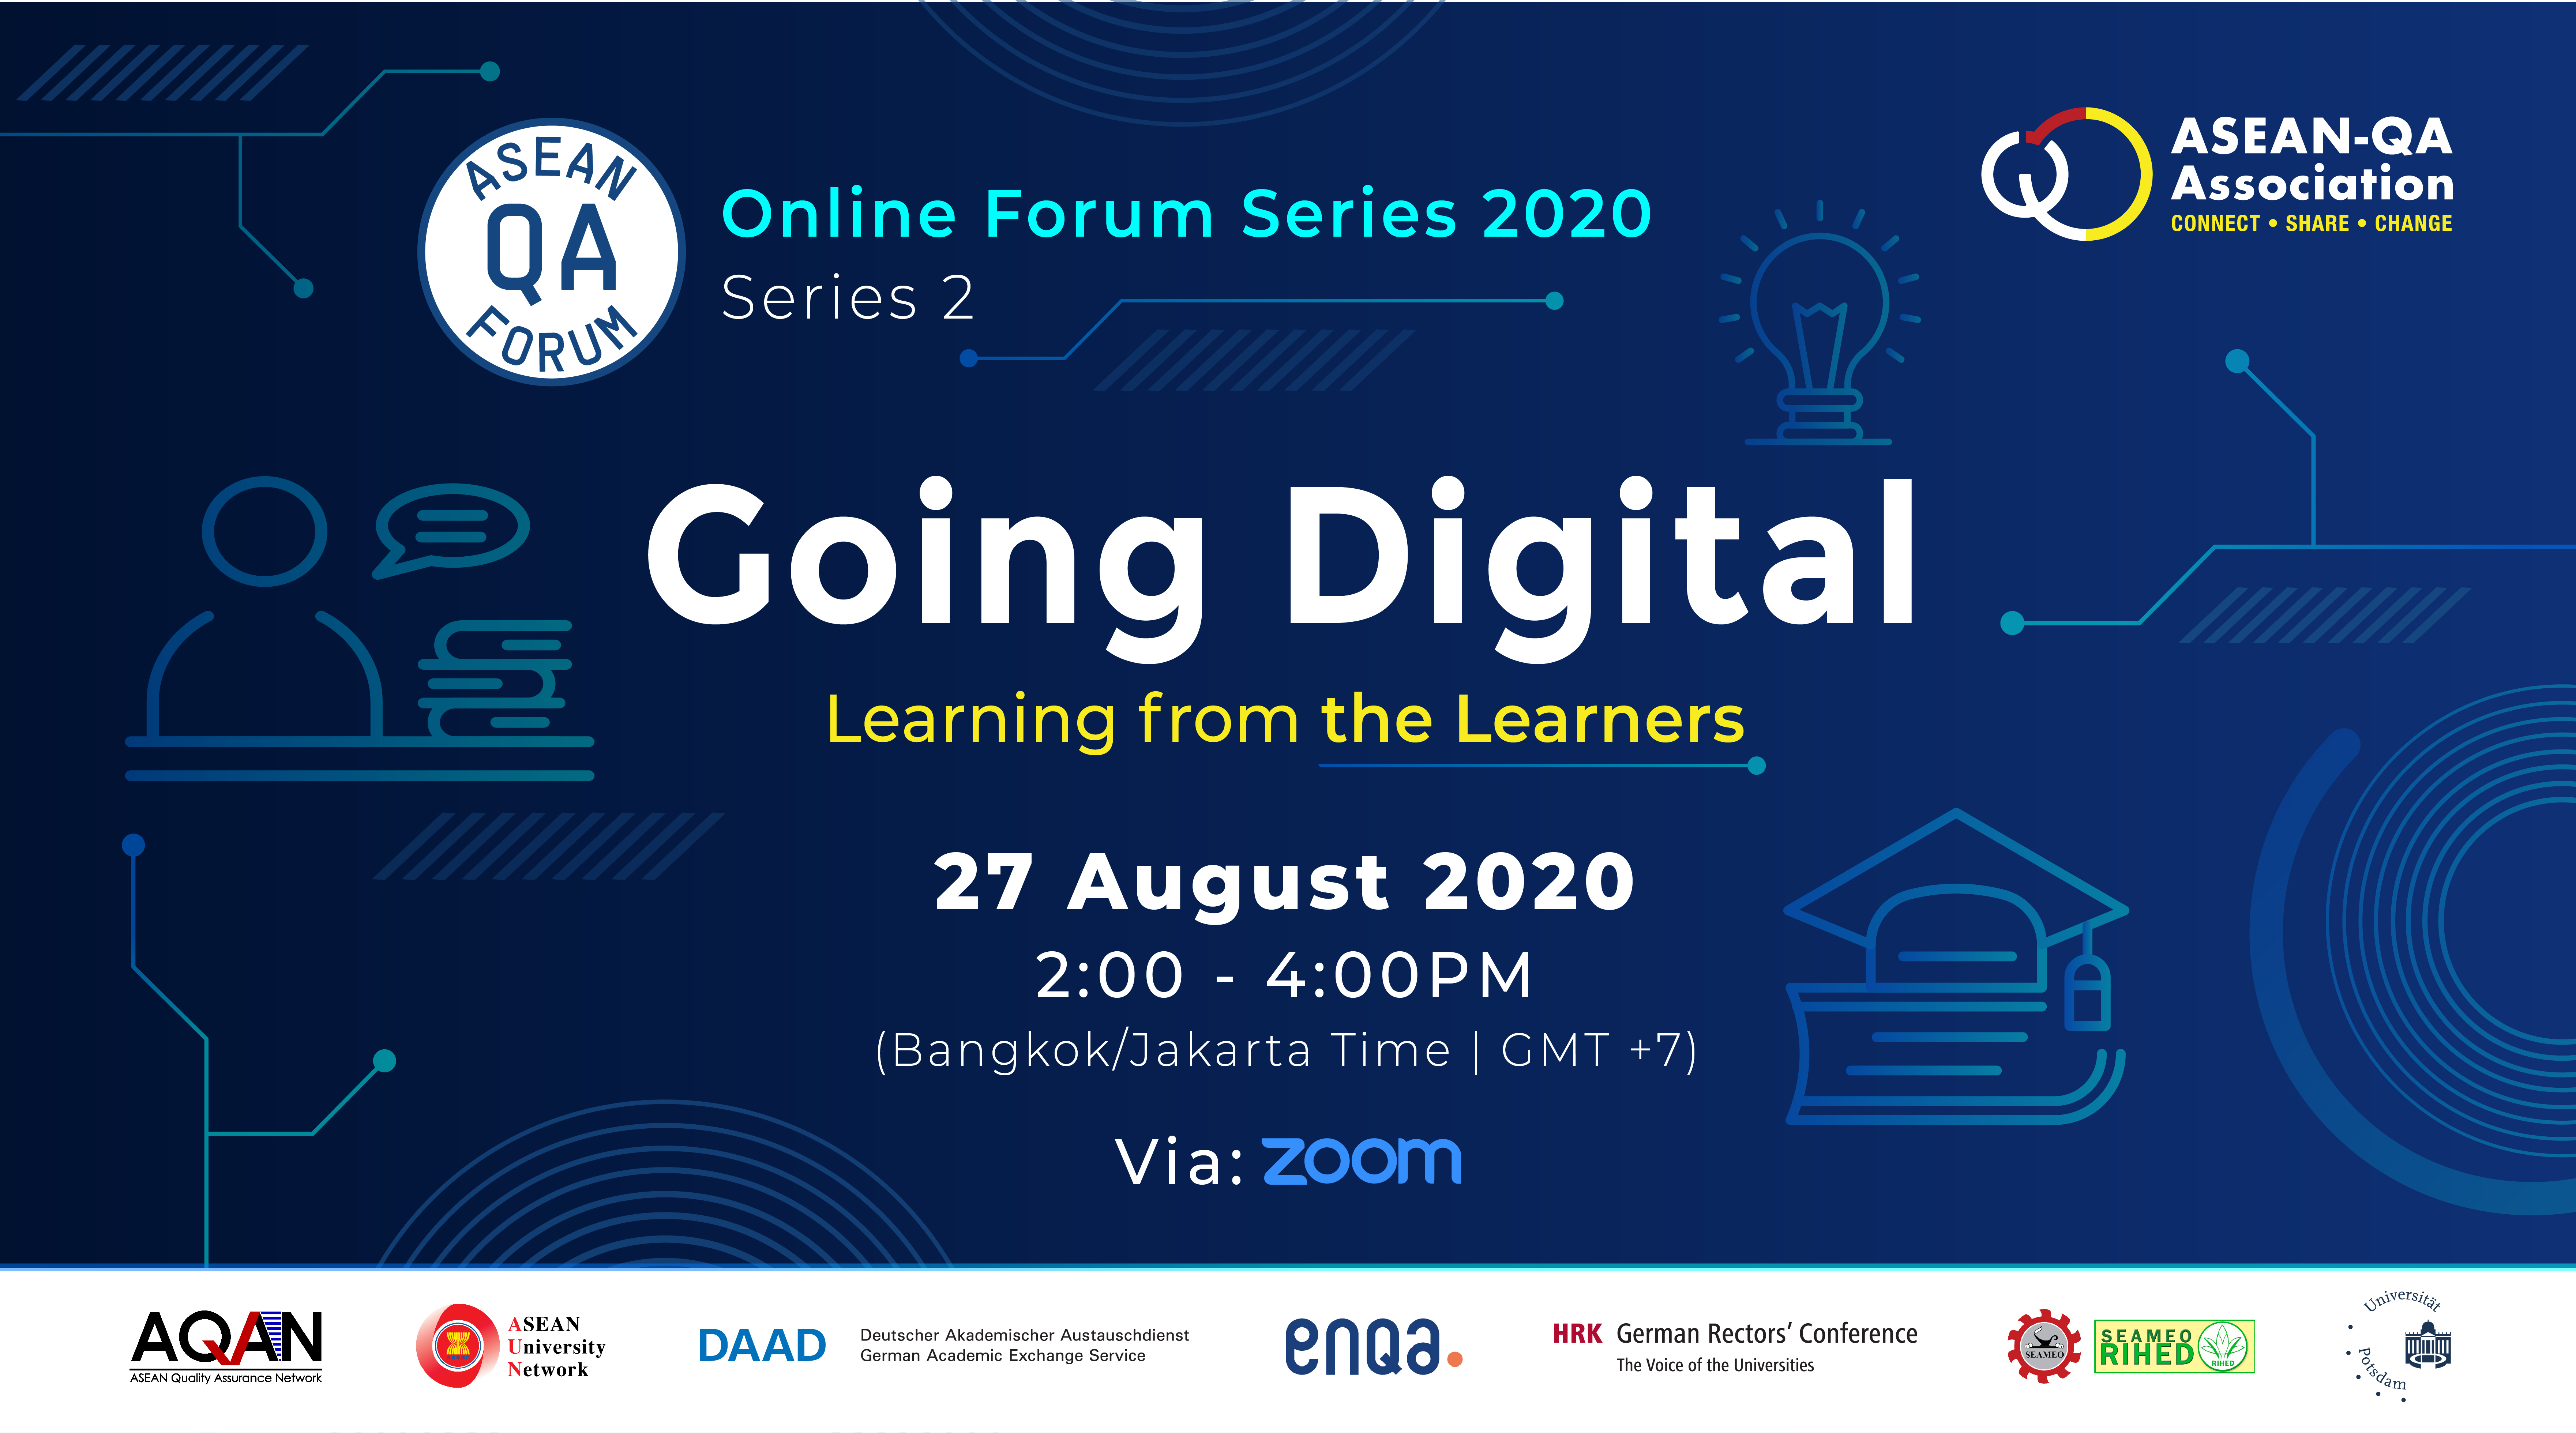 Online Forum 2020 Series 2 | August 27, 2020, 2:00 PM Bangkok/Jakarta time/ GMT +7 via Zoom.